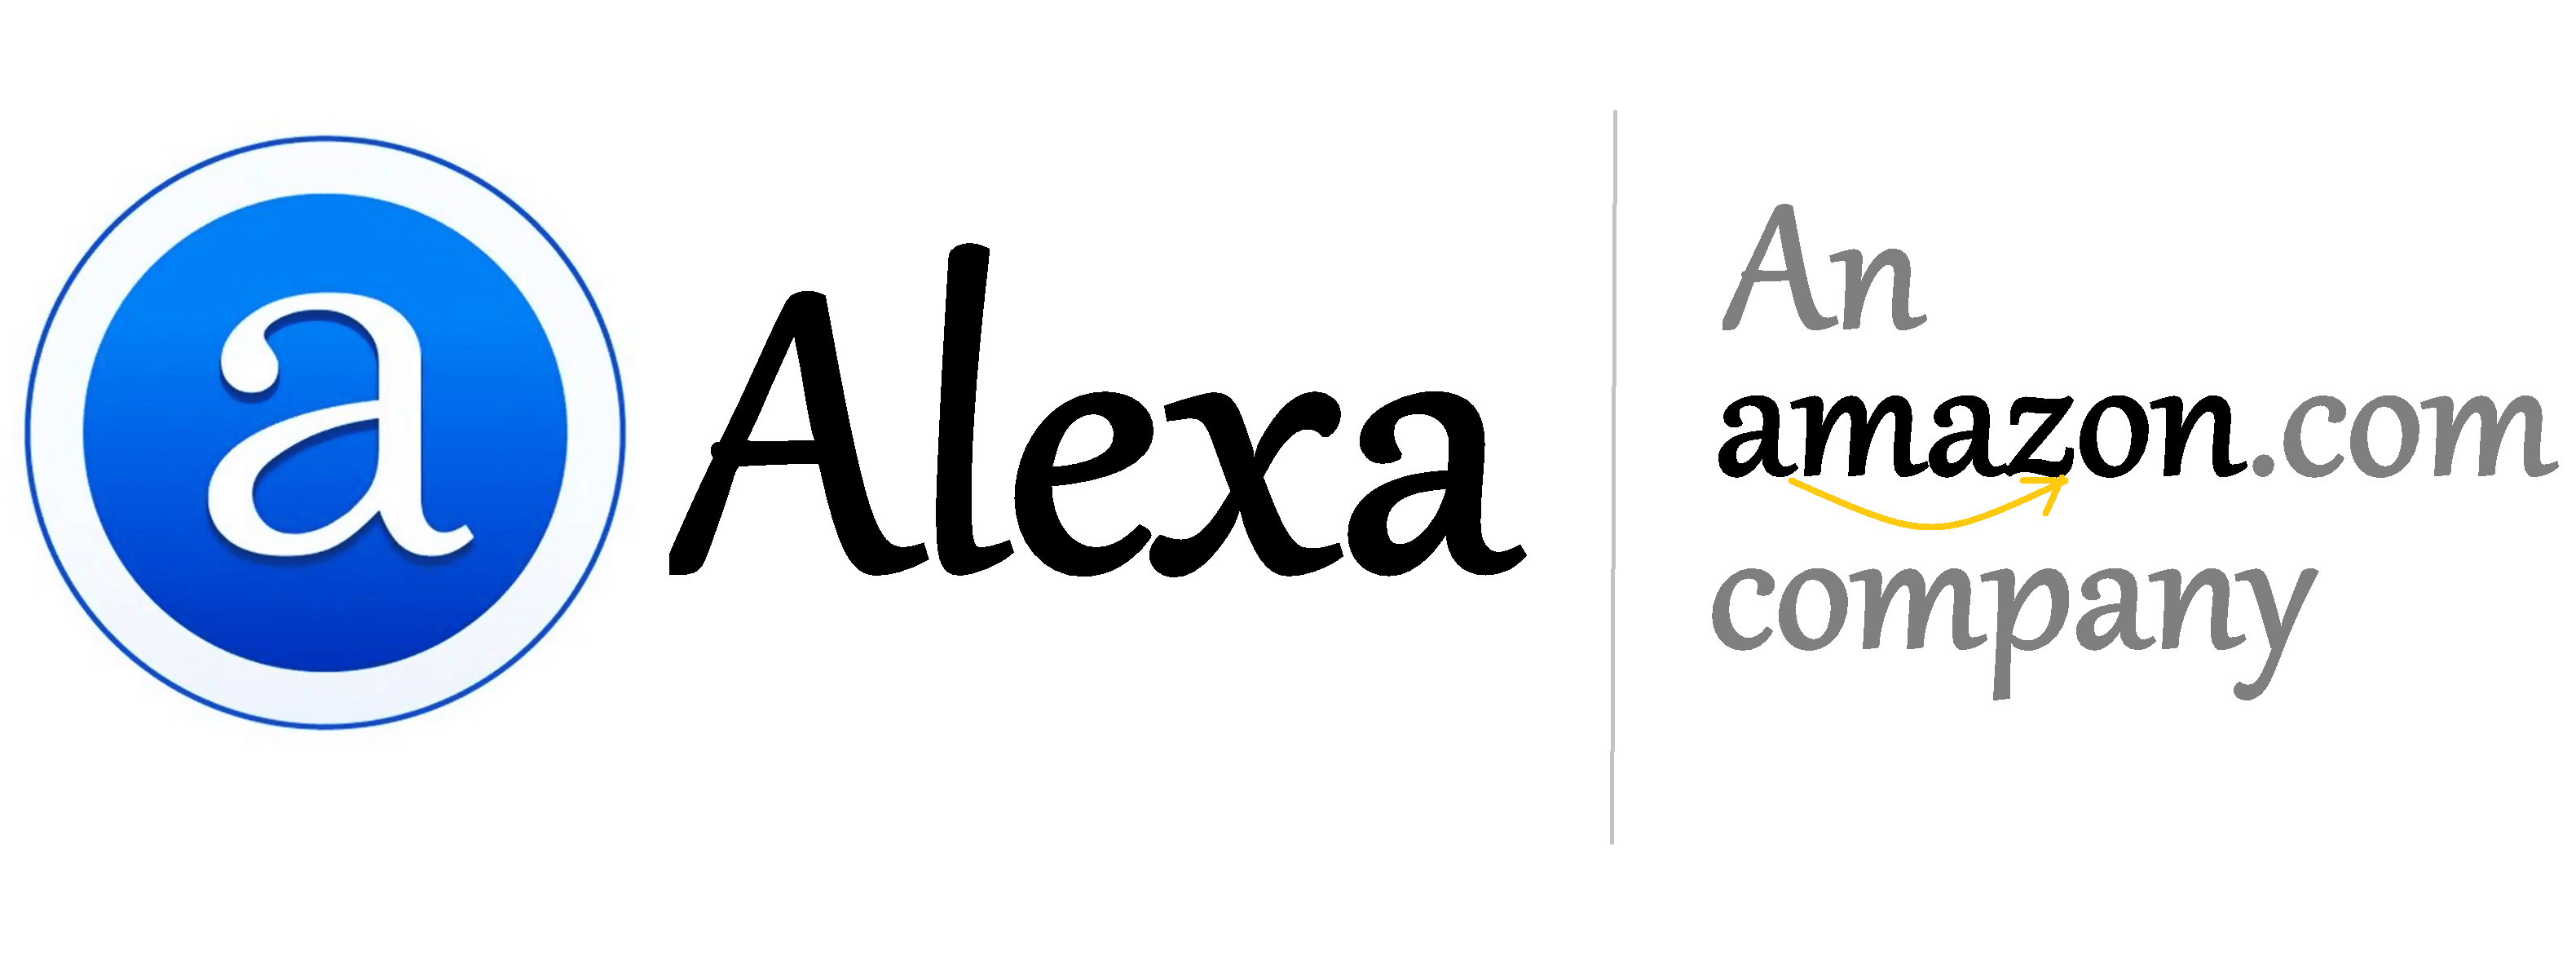 alexa-logo  Propel Marketing & Design, Inc.